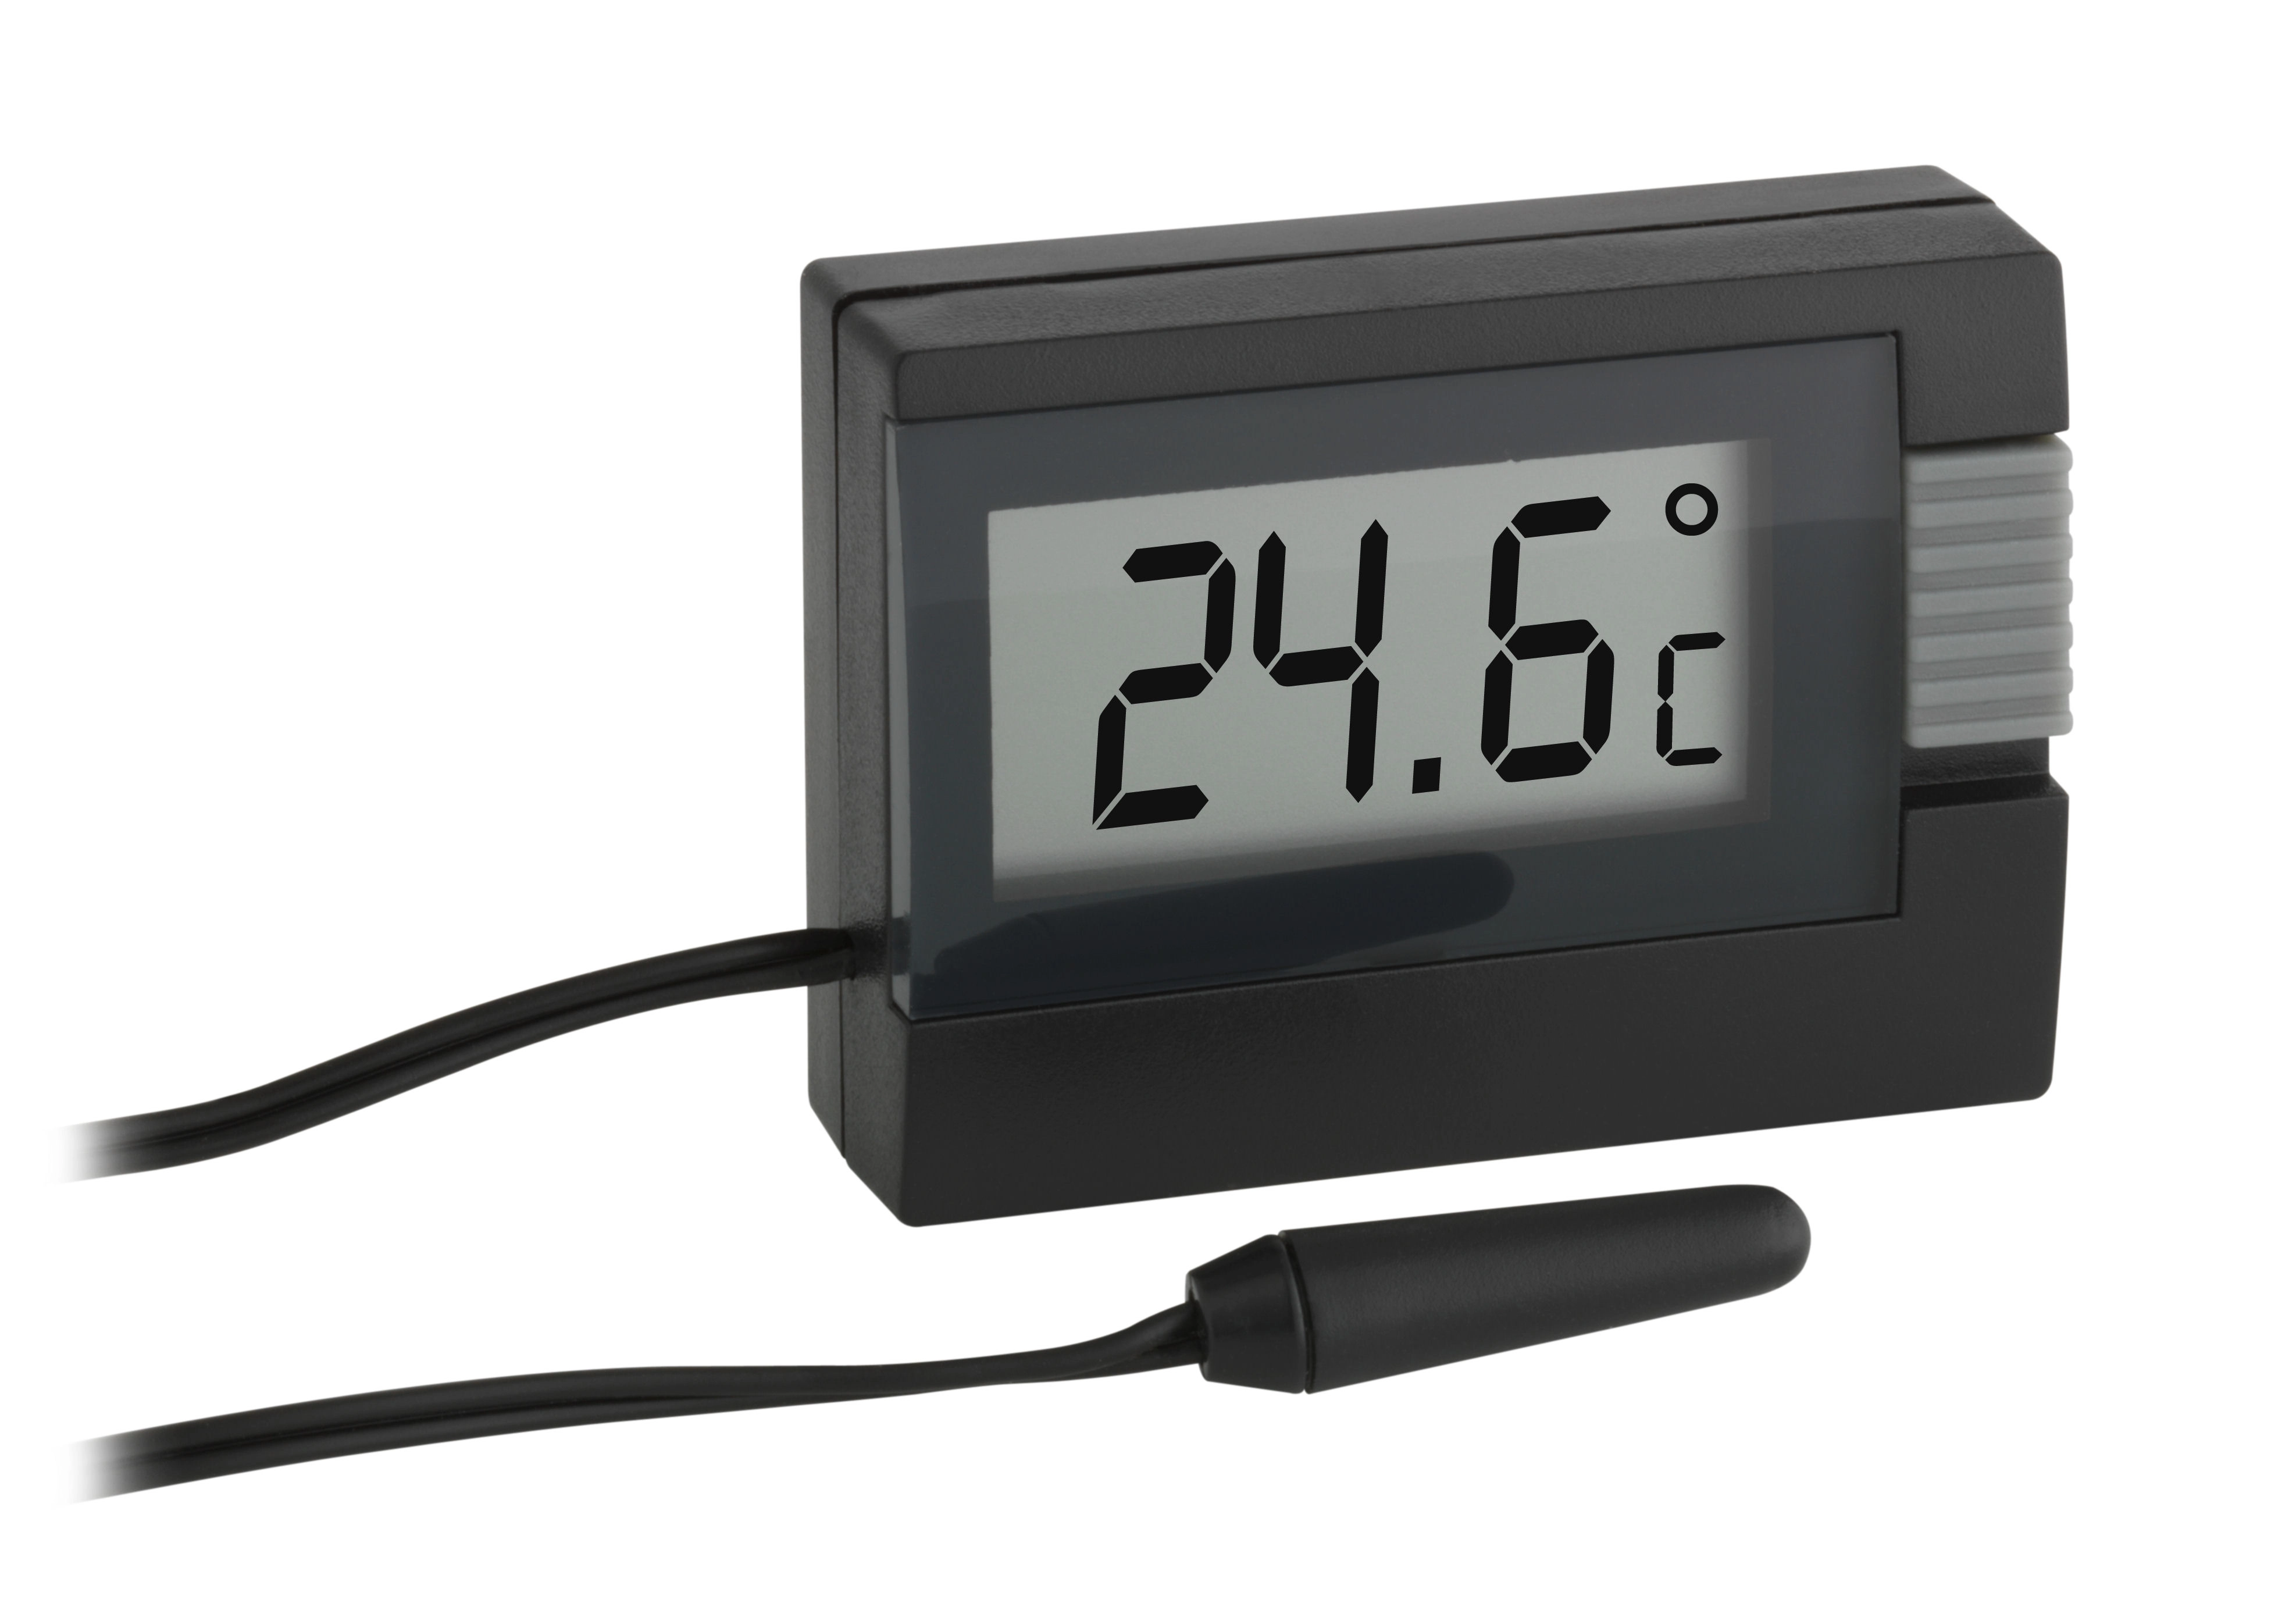 TFA Funk-Thermometer Pop Schwarz kaufen bei OBI